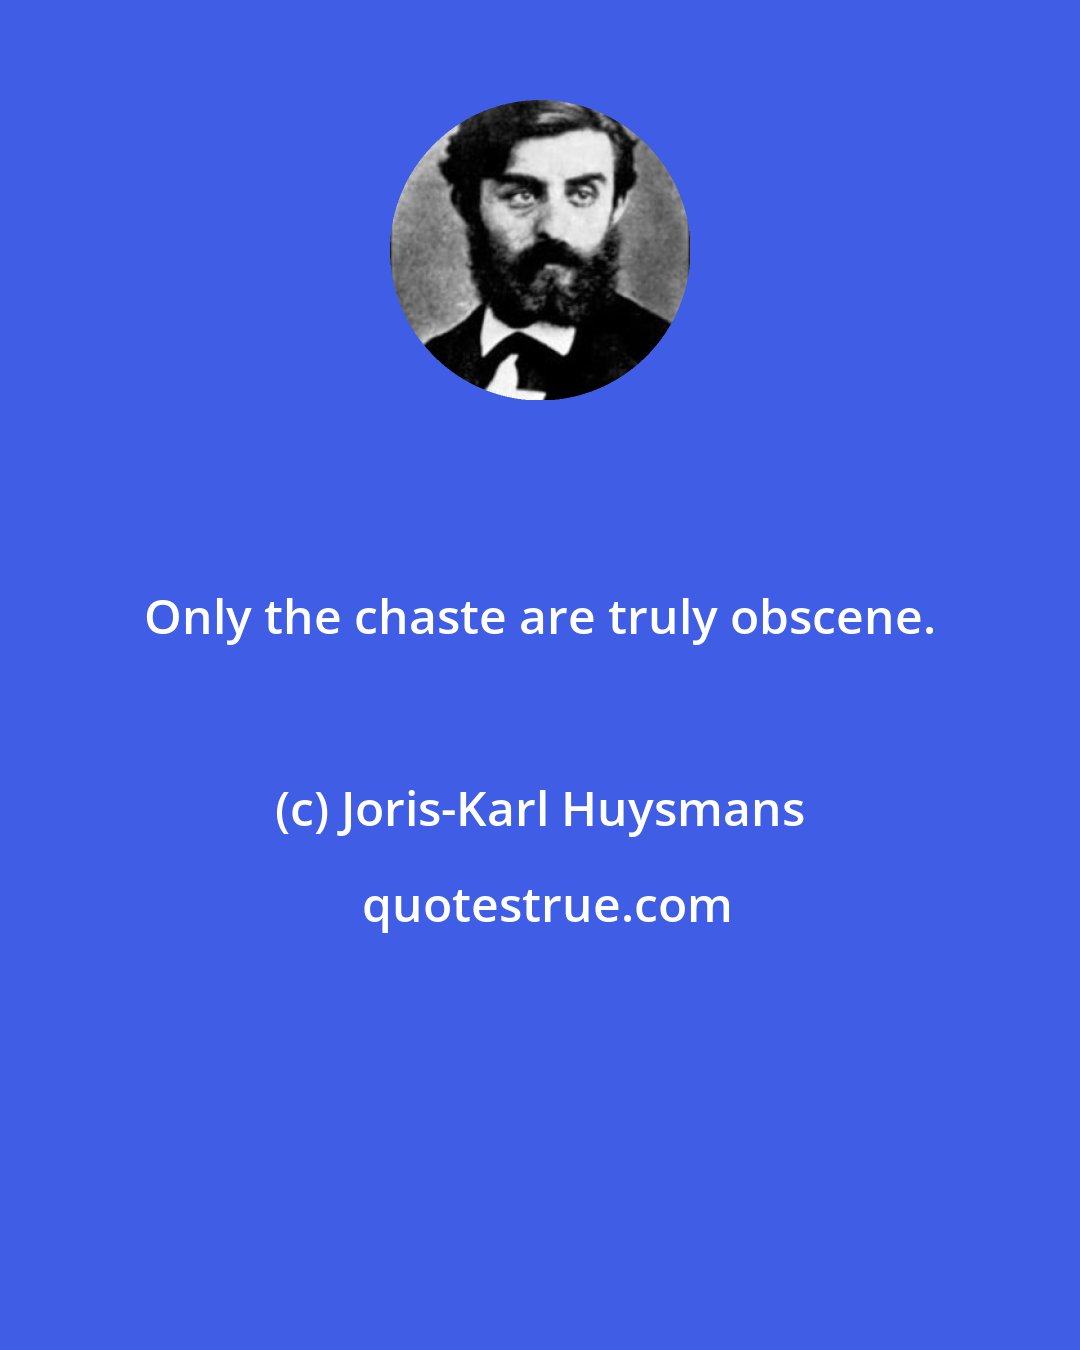 Joris-Karl Huysmans: Only the chaste are truly obscene.